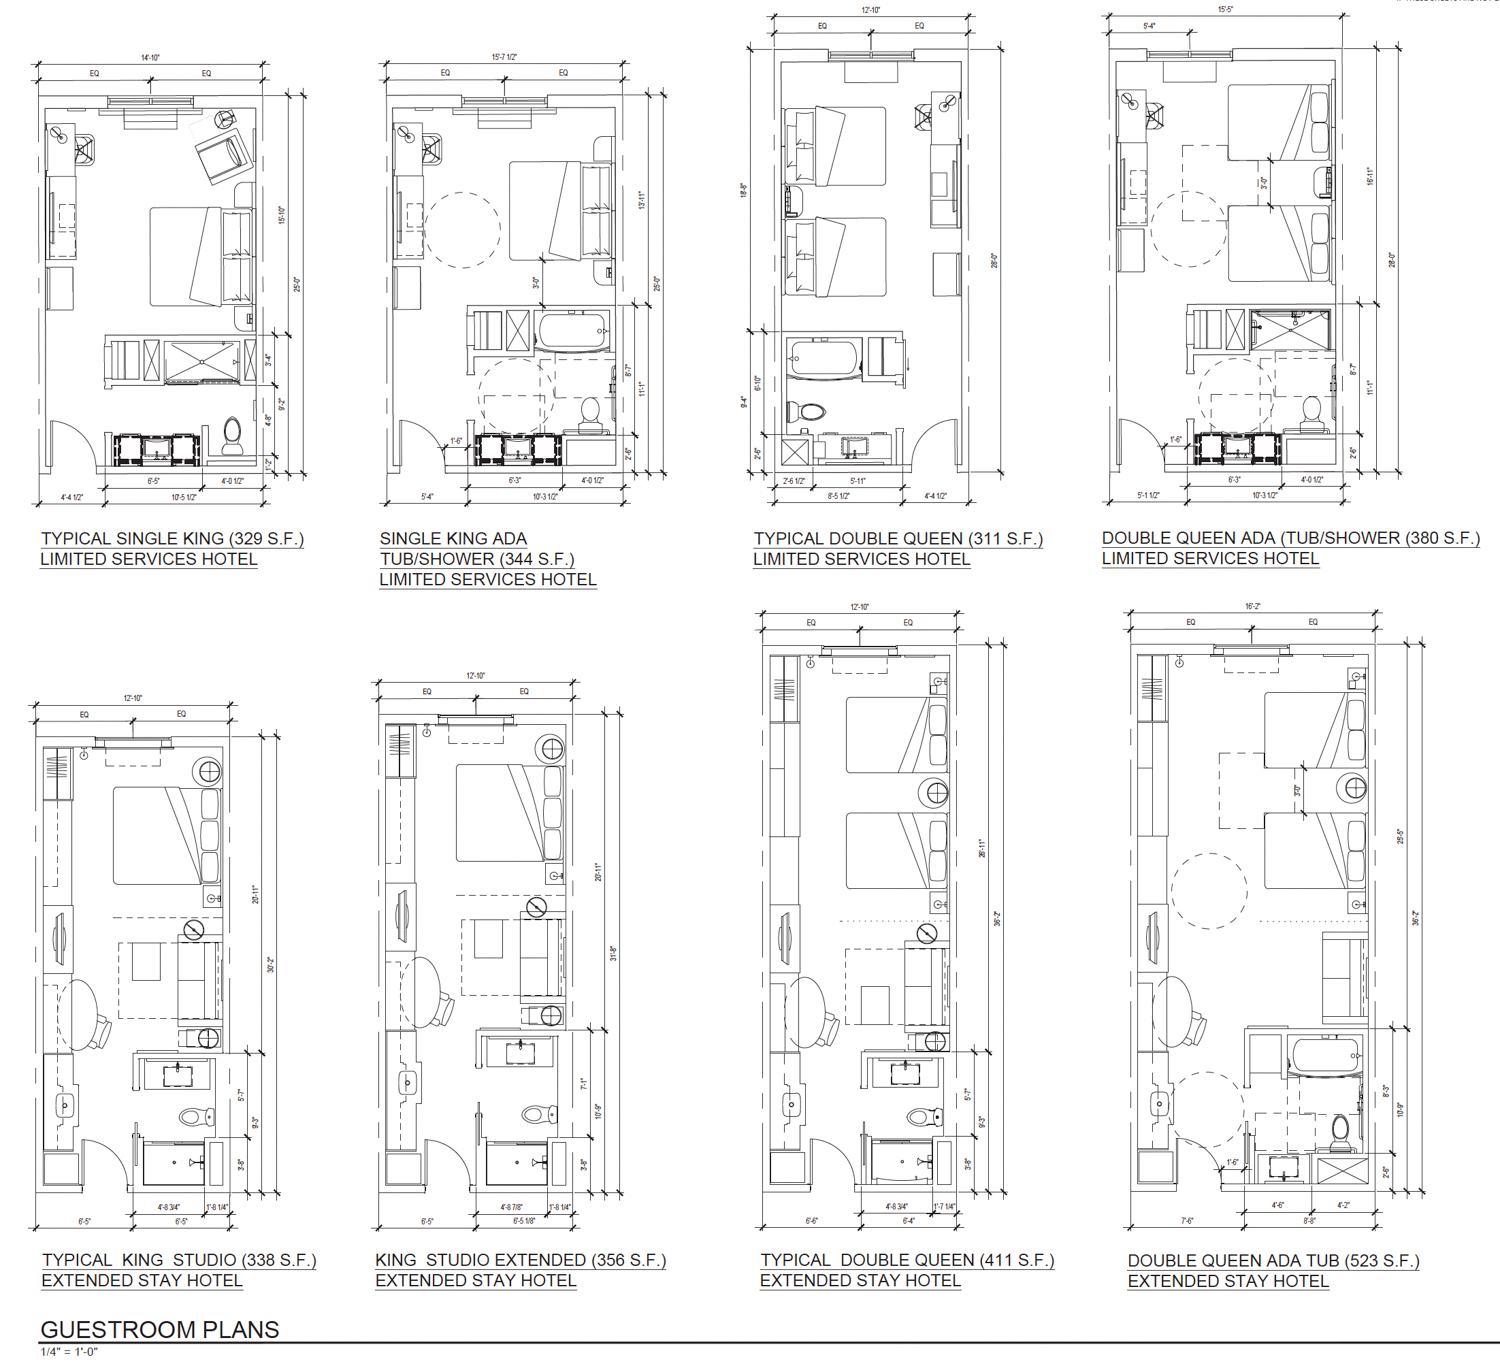 312 Brokaw Road average room floor plan, illustration by Jensen Design Architects